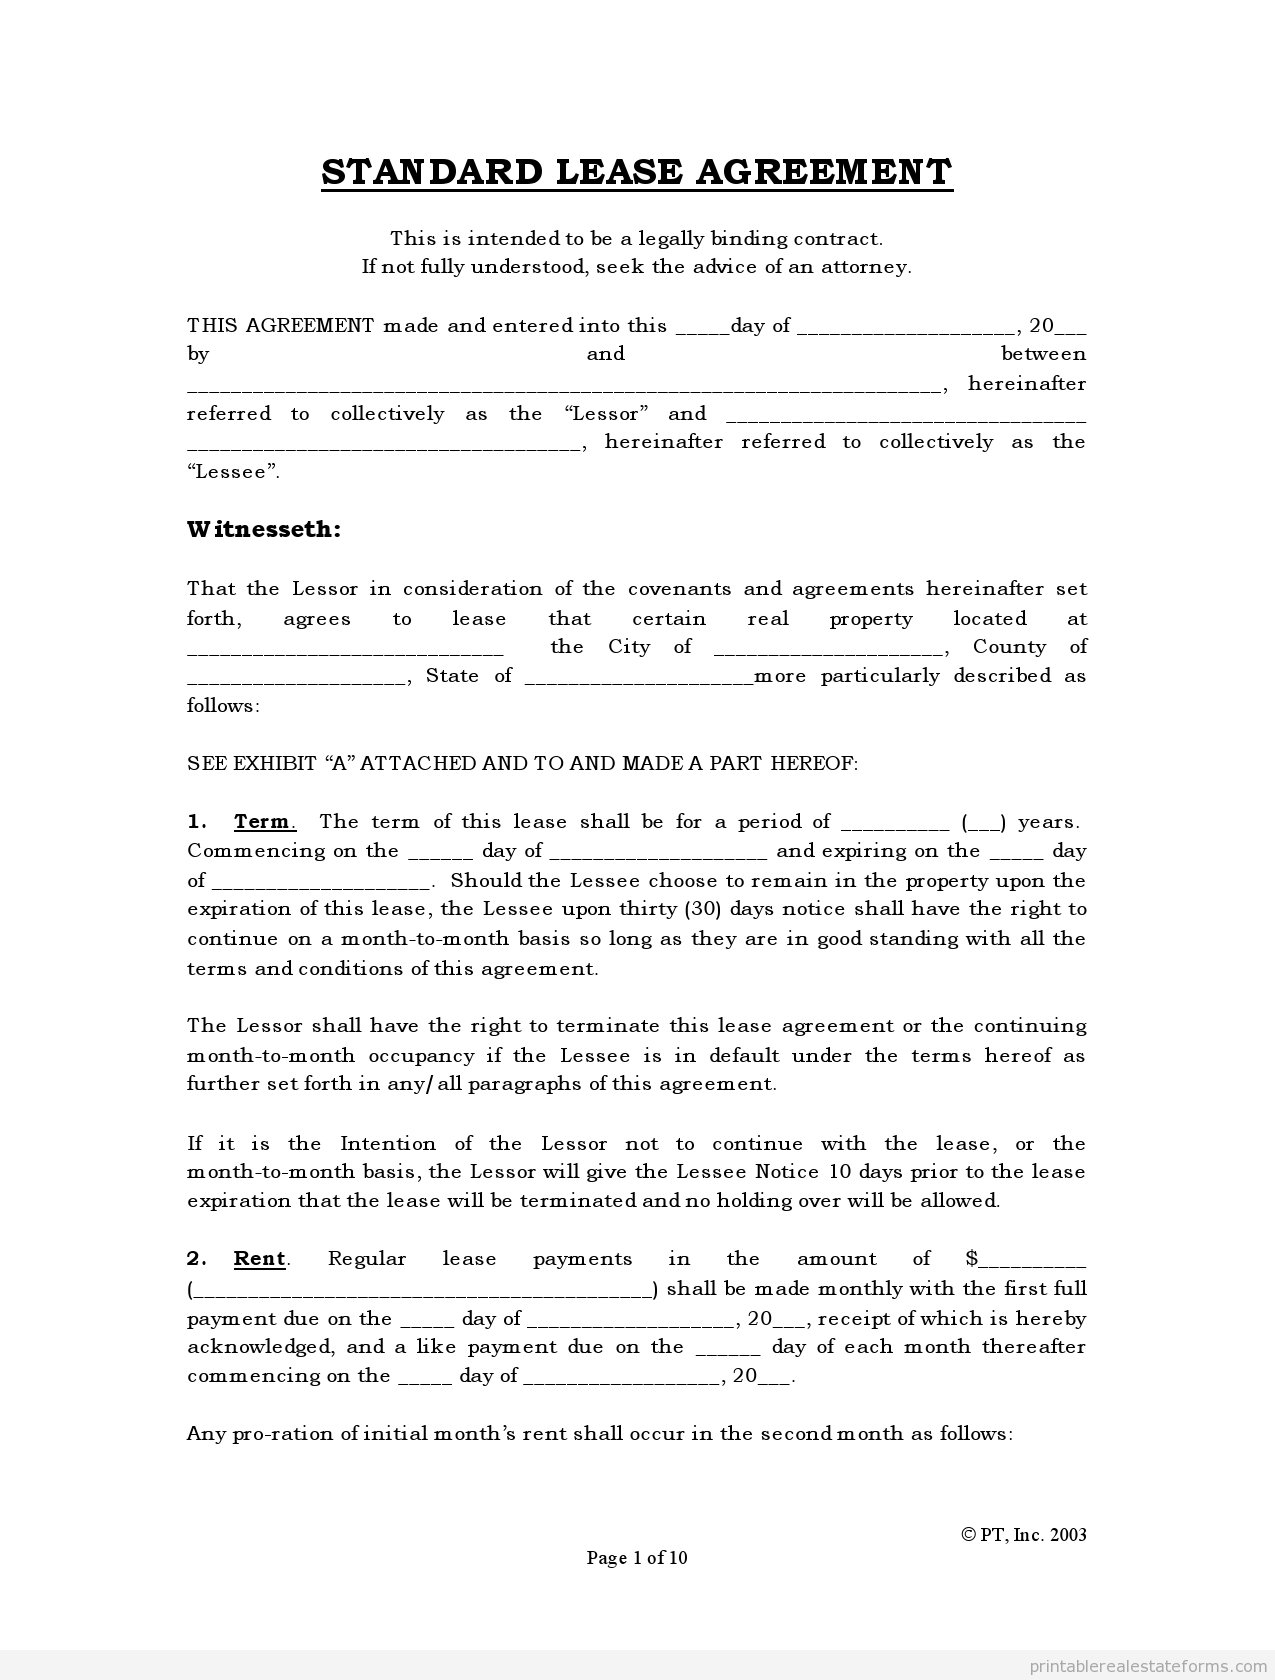 Free Rental Agreements To Print | Free Standard Lease Agreement Form - Free Printable Lease Agreement Texas